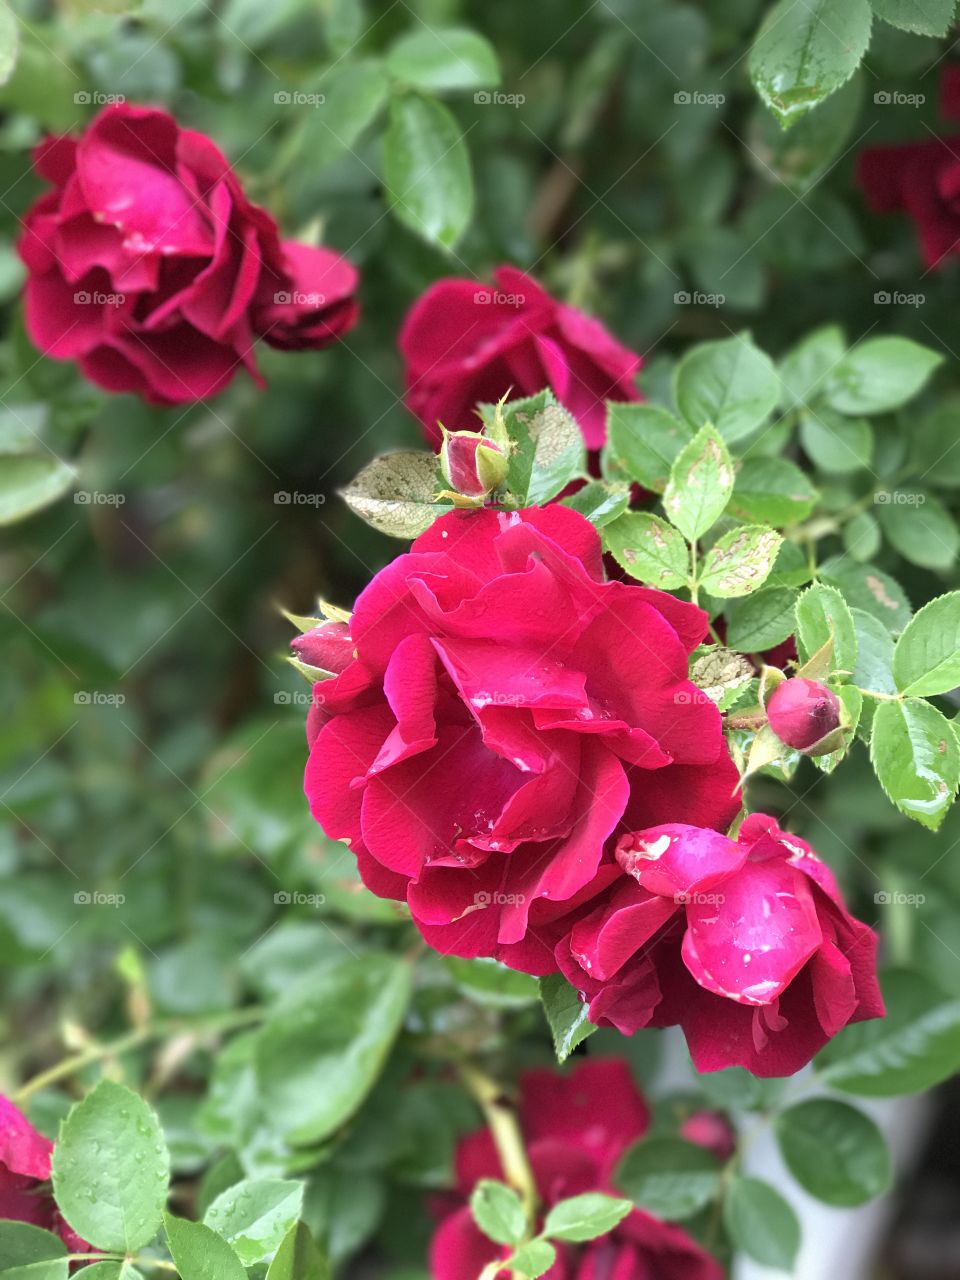 Roses in the rain ☔️ 